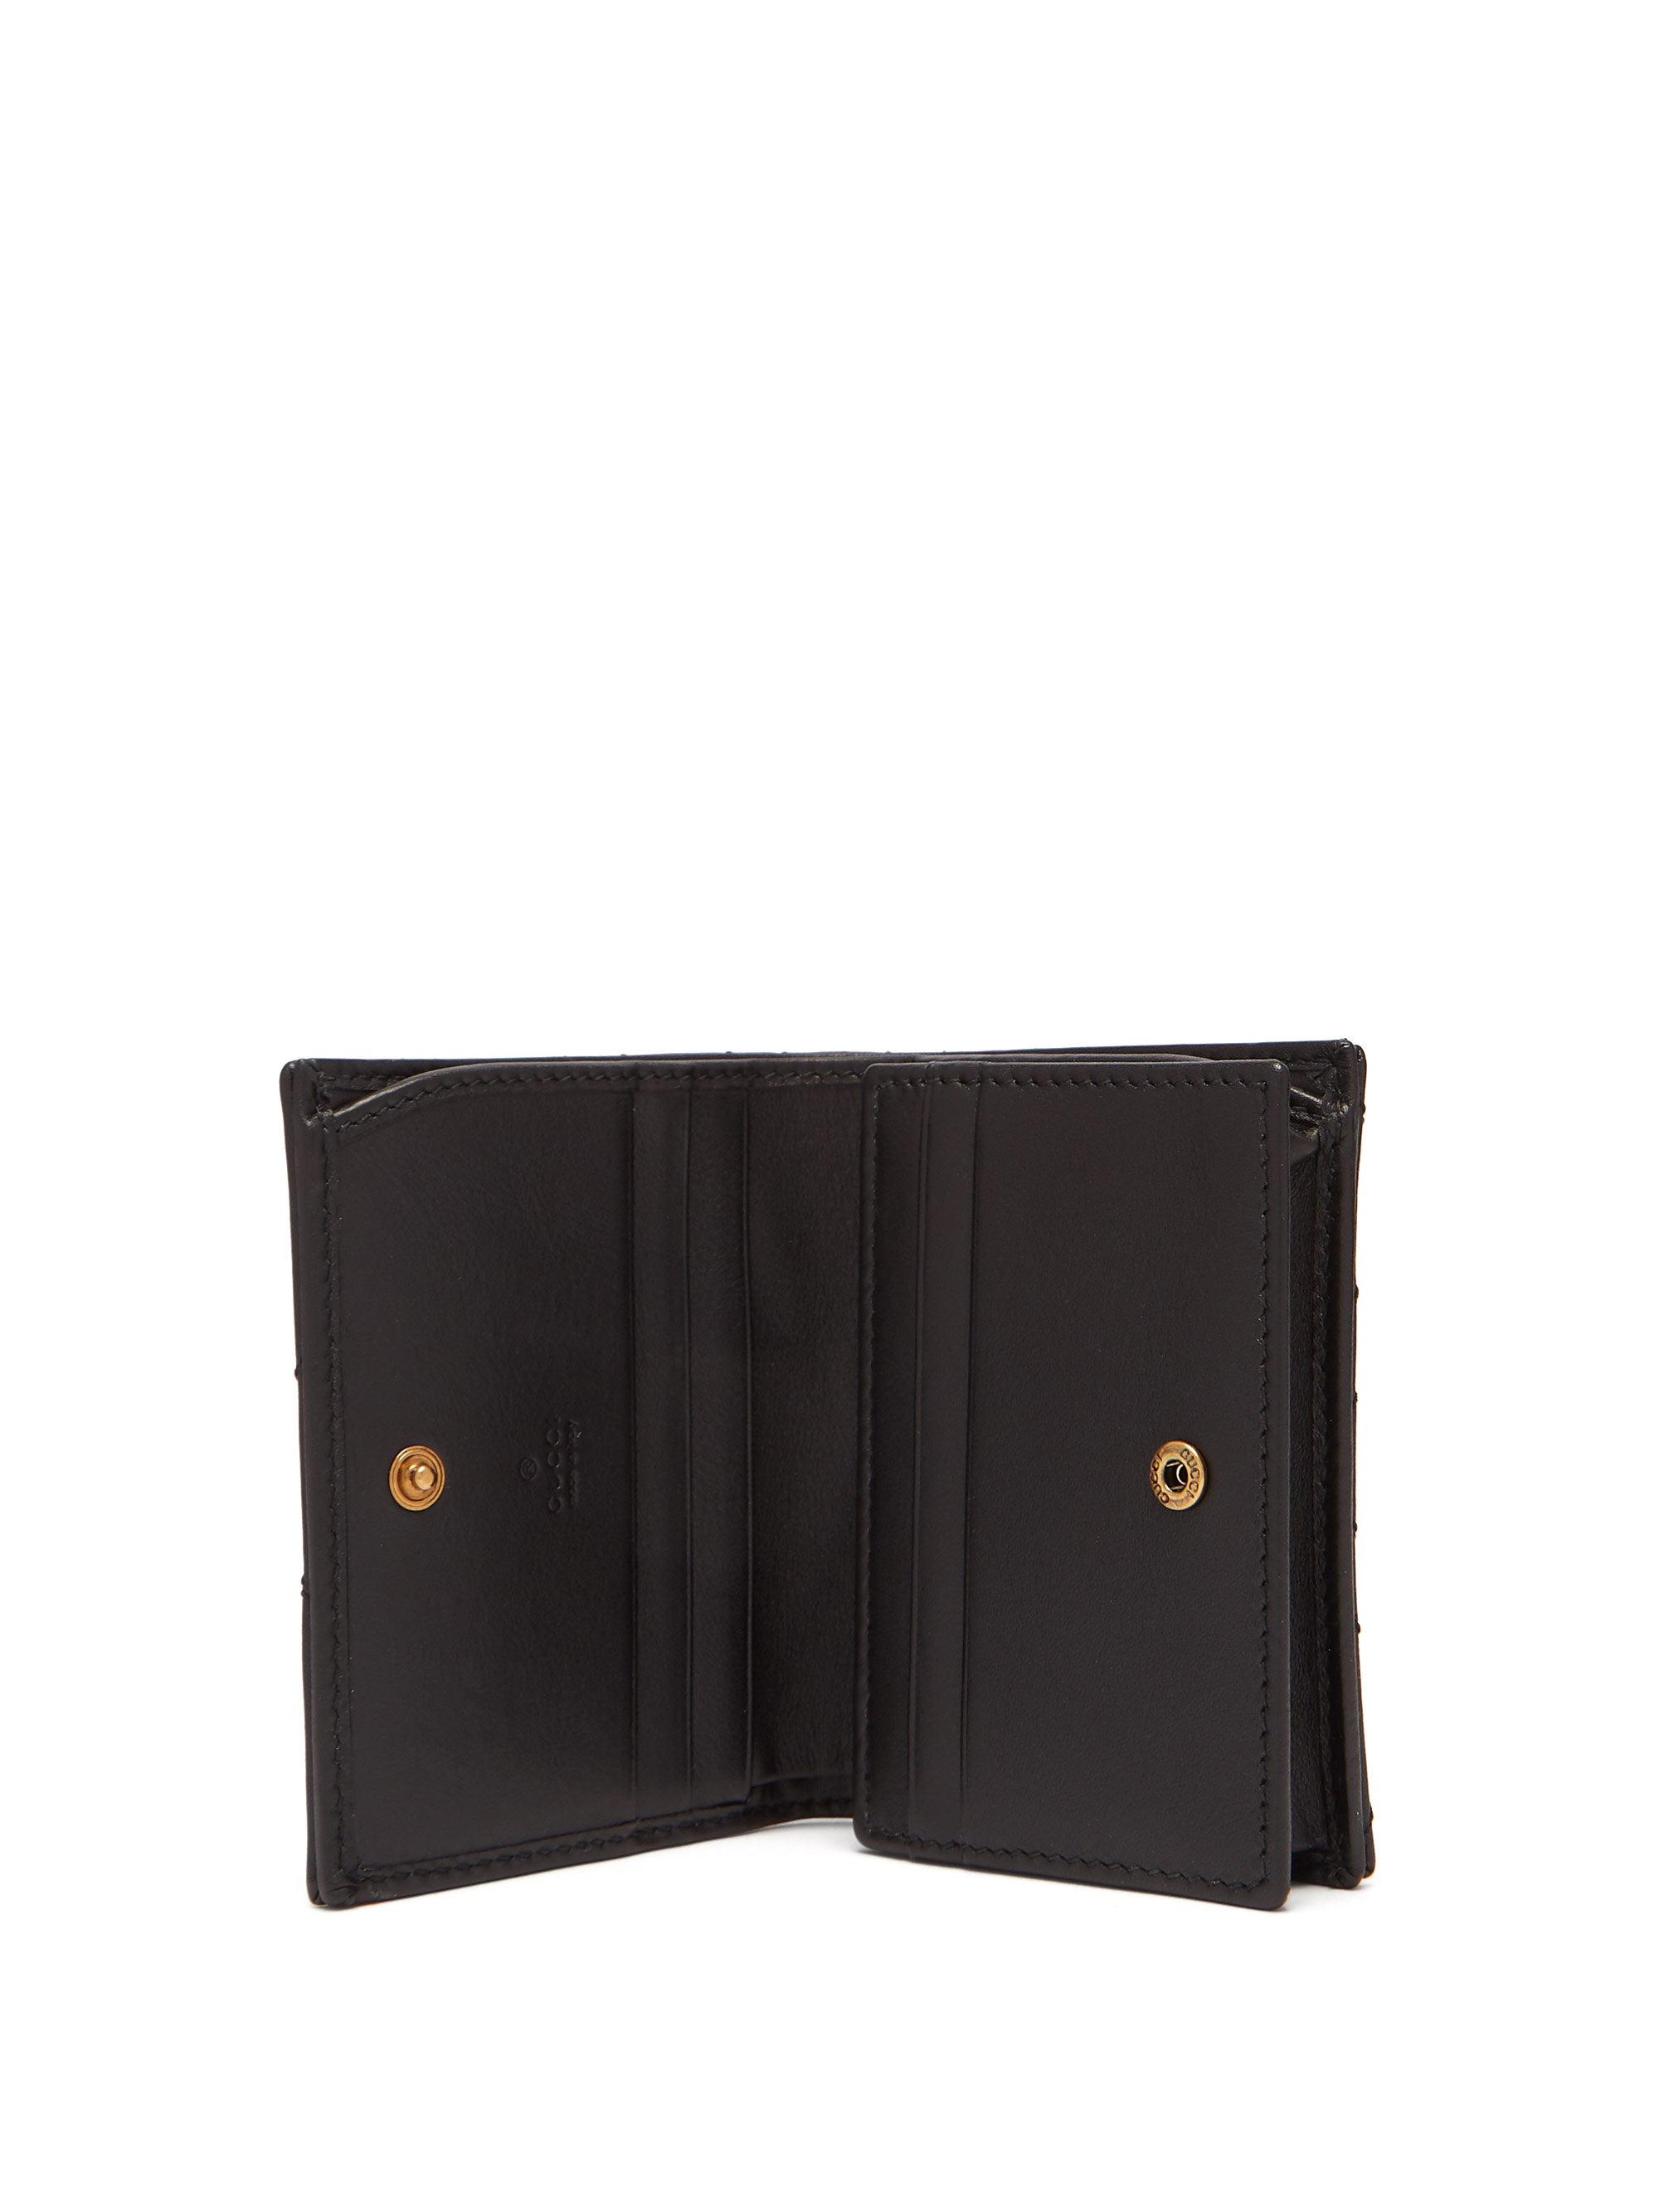 Gucci Leather Calfskin Matelasse GG Marmont Card Case Black - Save 